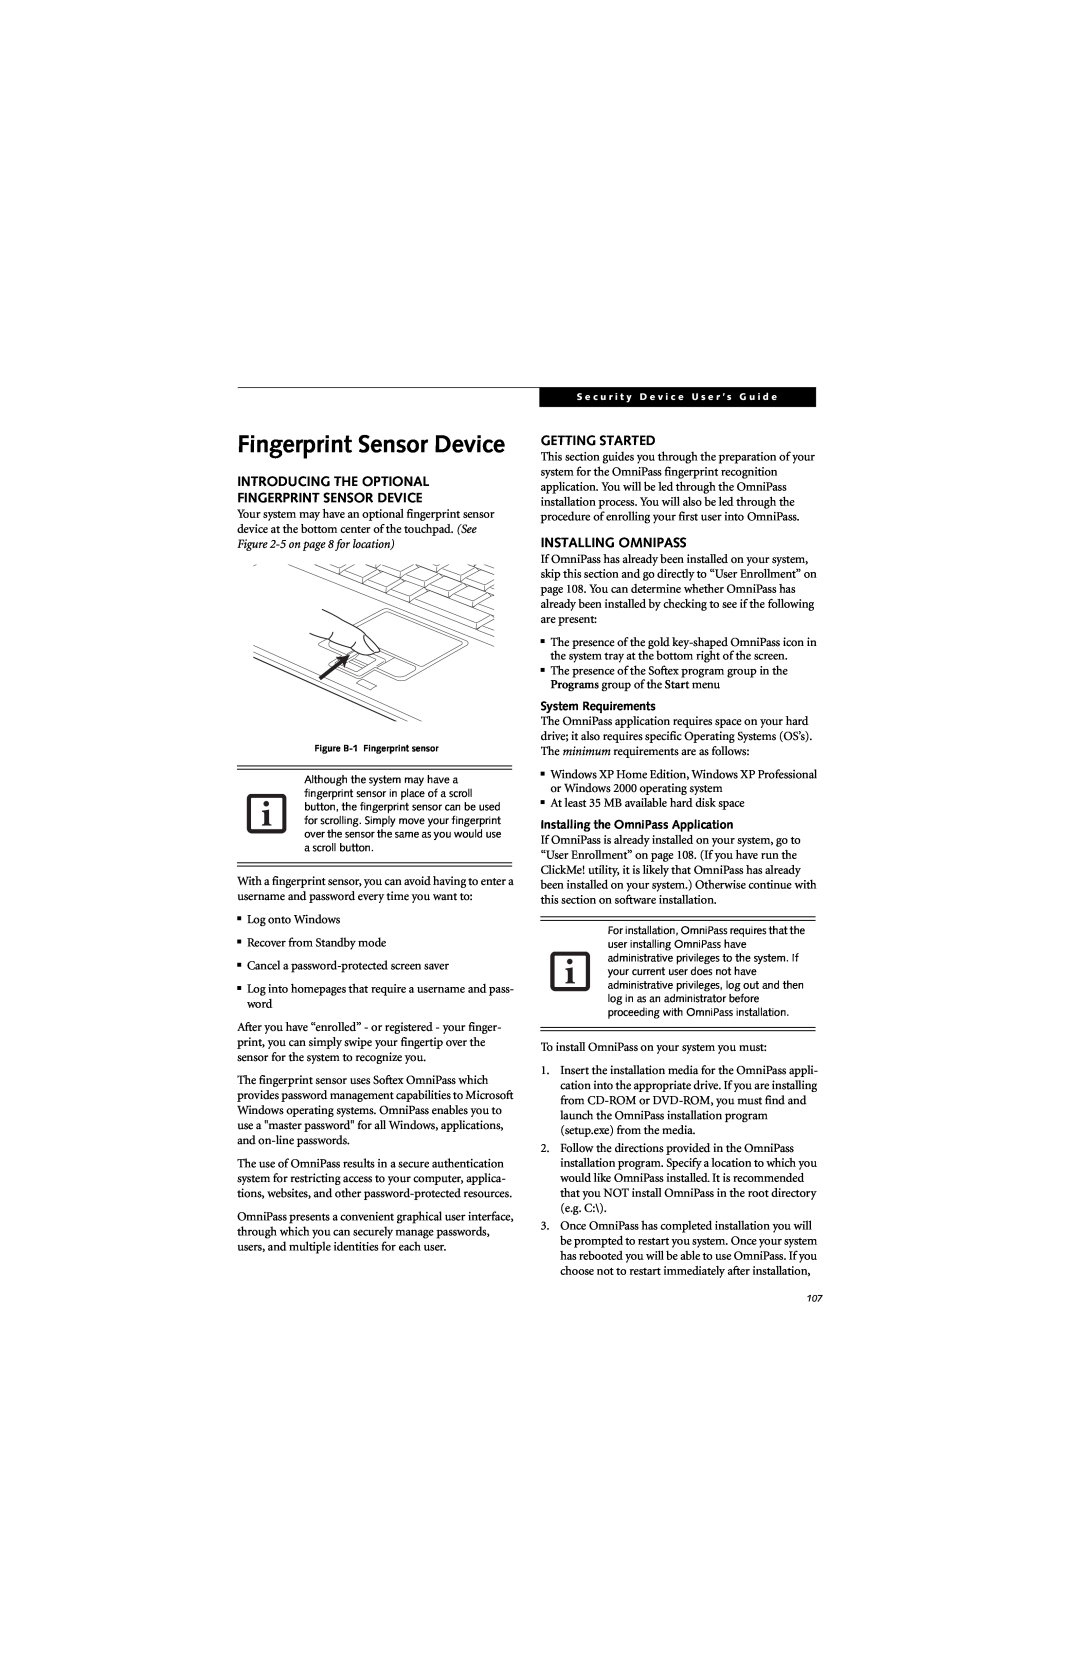 Fujitsu B6220 manual Introducing The Optional Fingerprint Sensor Device, Getting Started, Installing Omnipass 